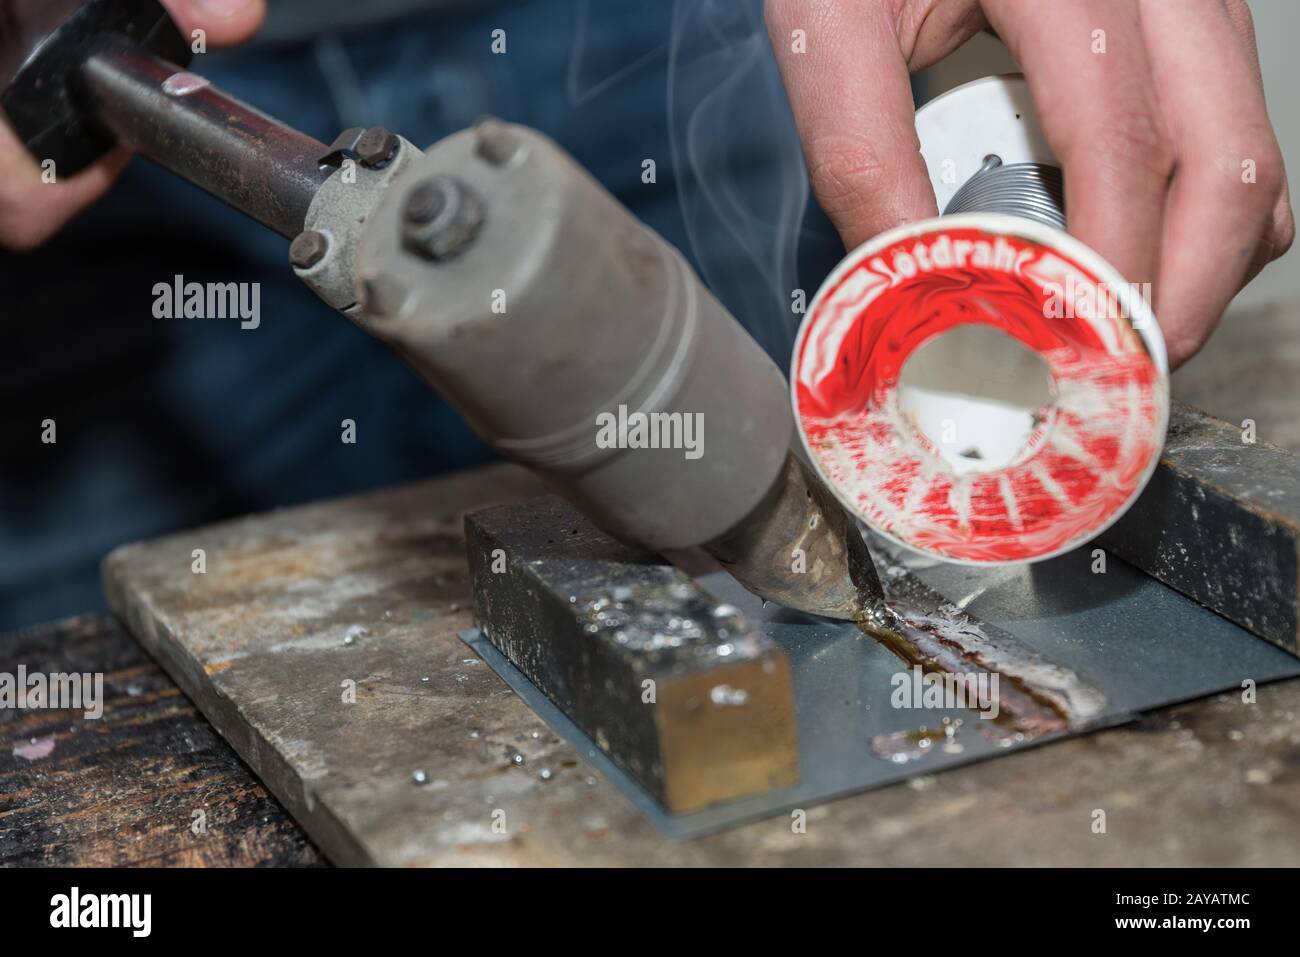 Handarbeiter lernen mit Lötkolben und Lötdraht zu löten - Nahaufnahme Stockfoto